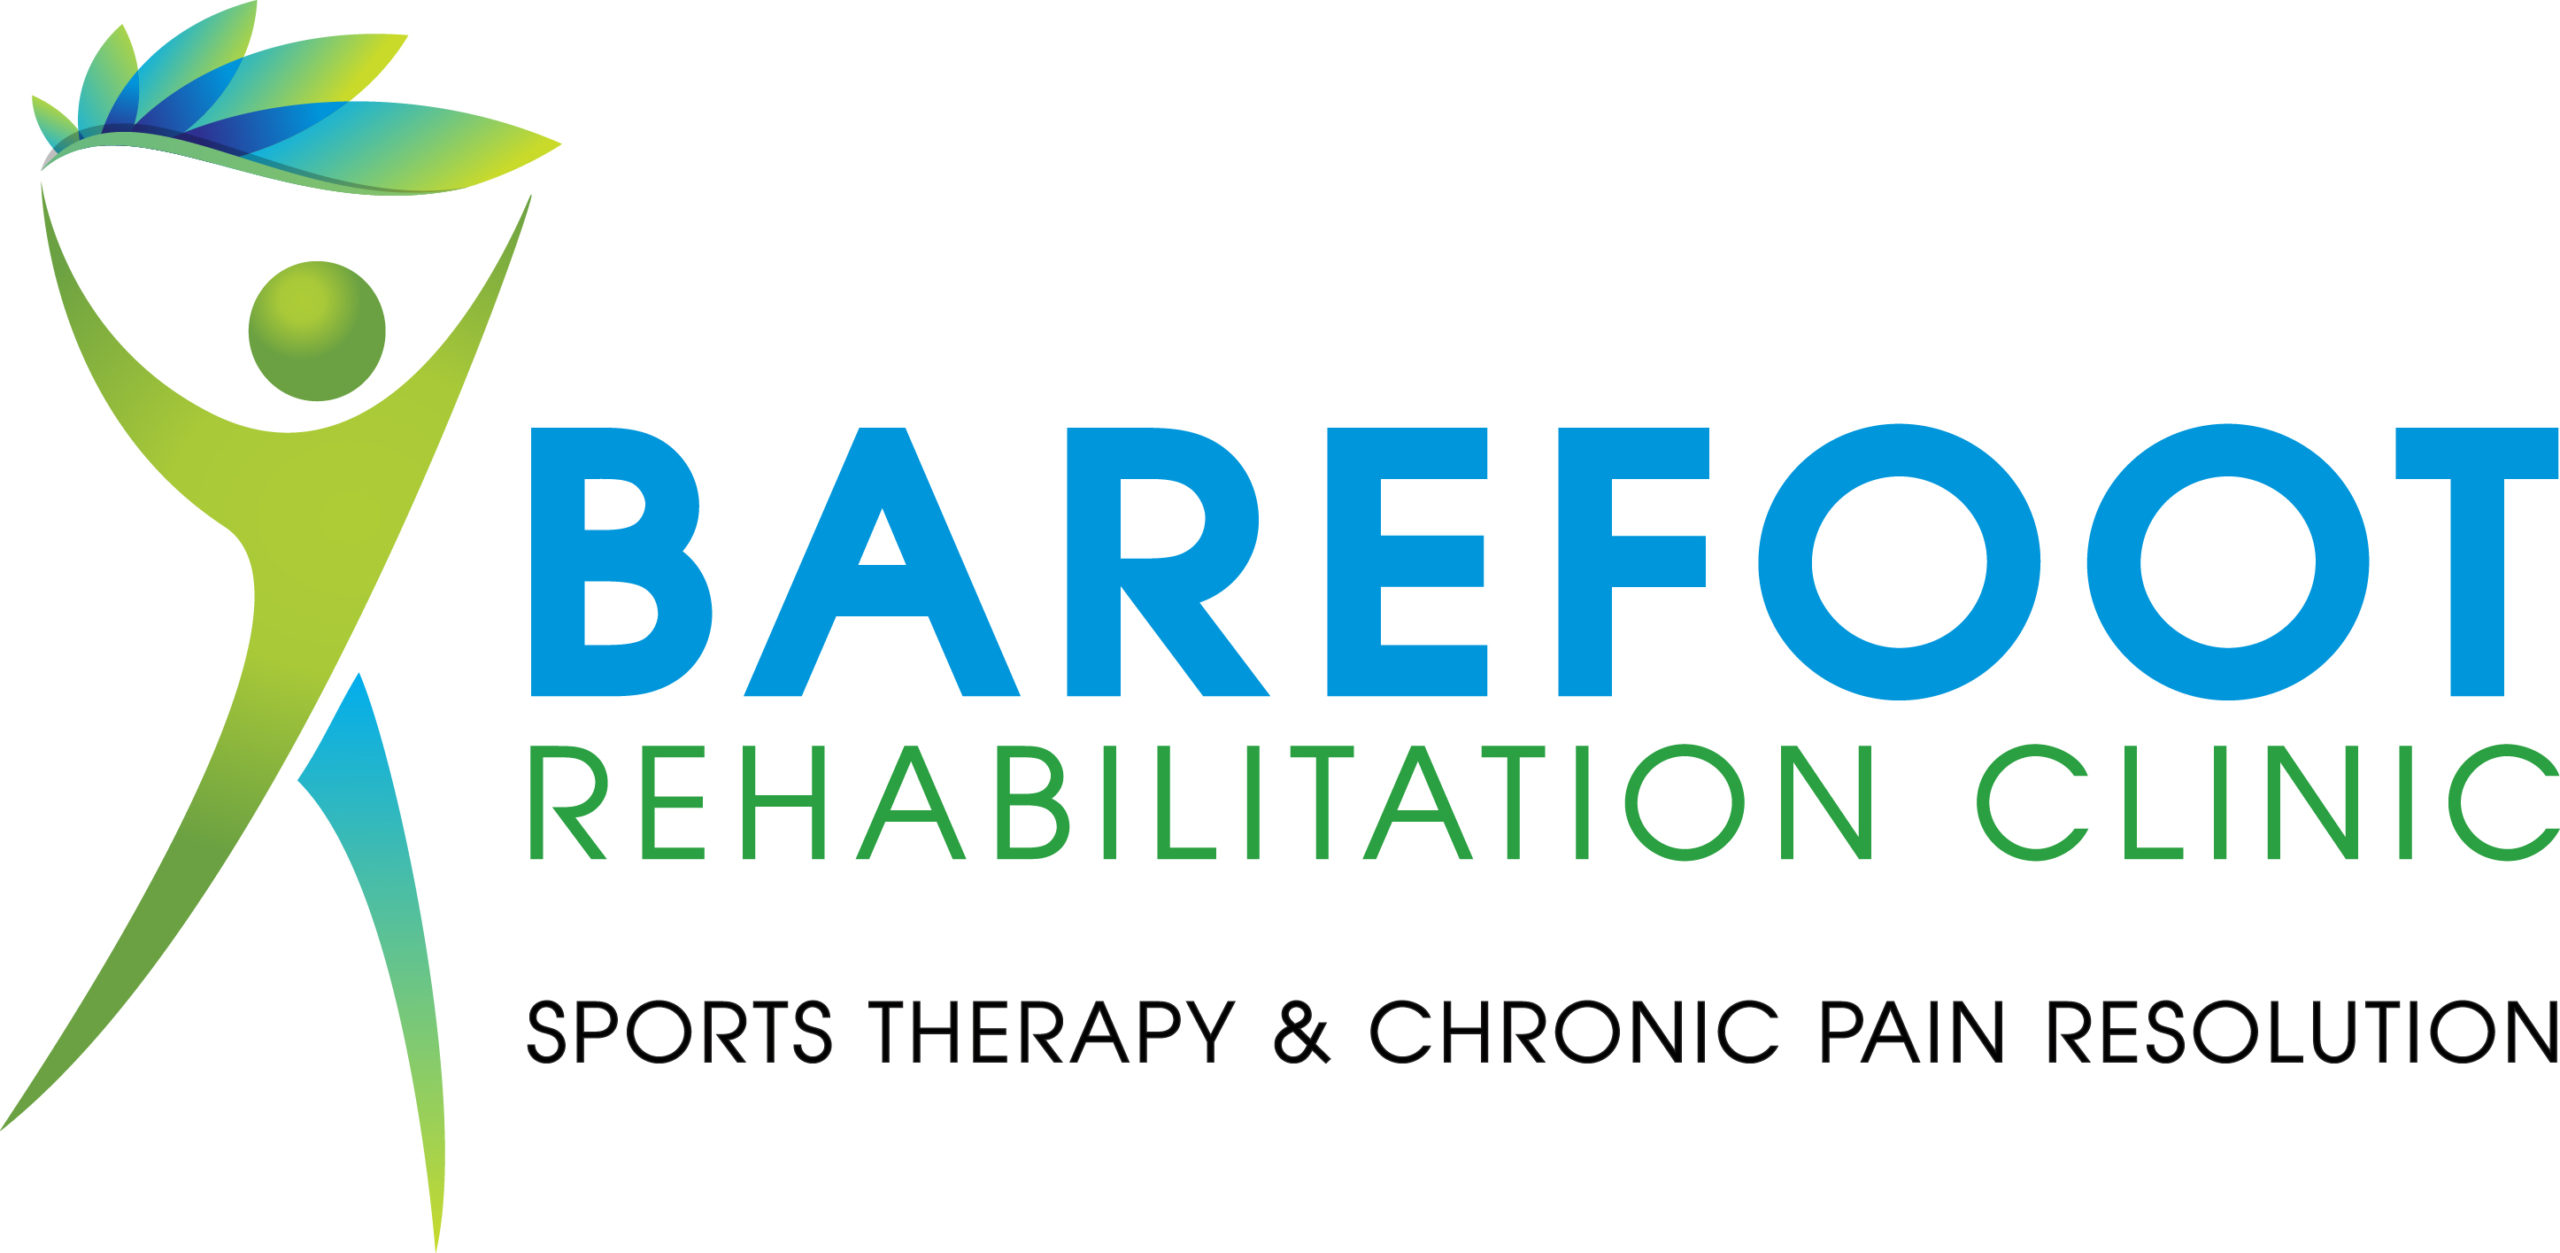 Barefoot Rehabilitation Clinic